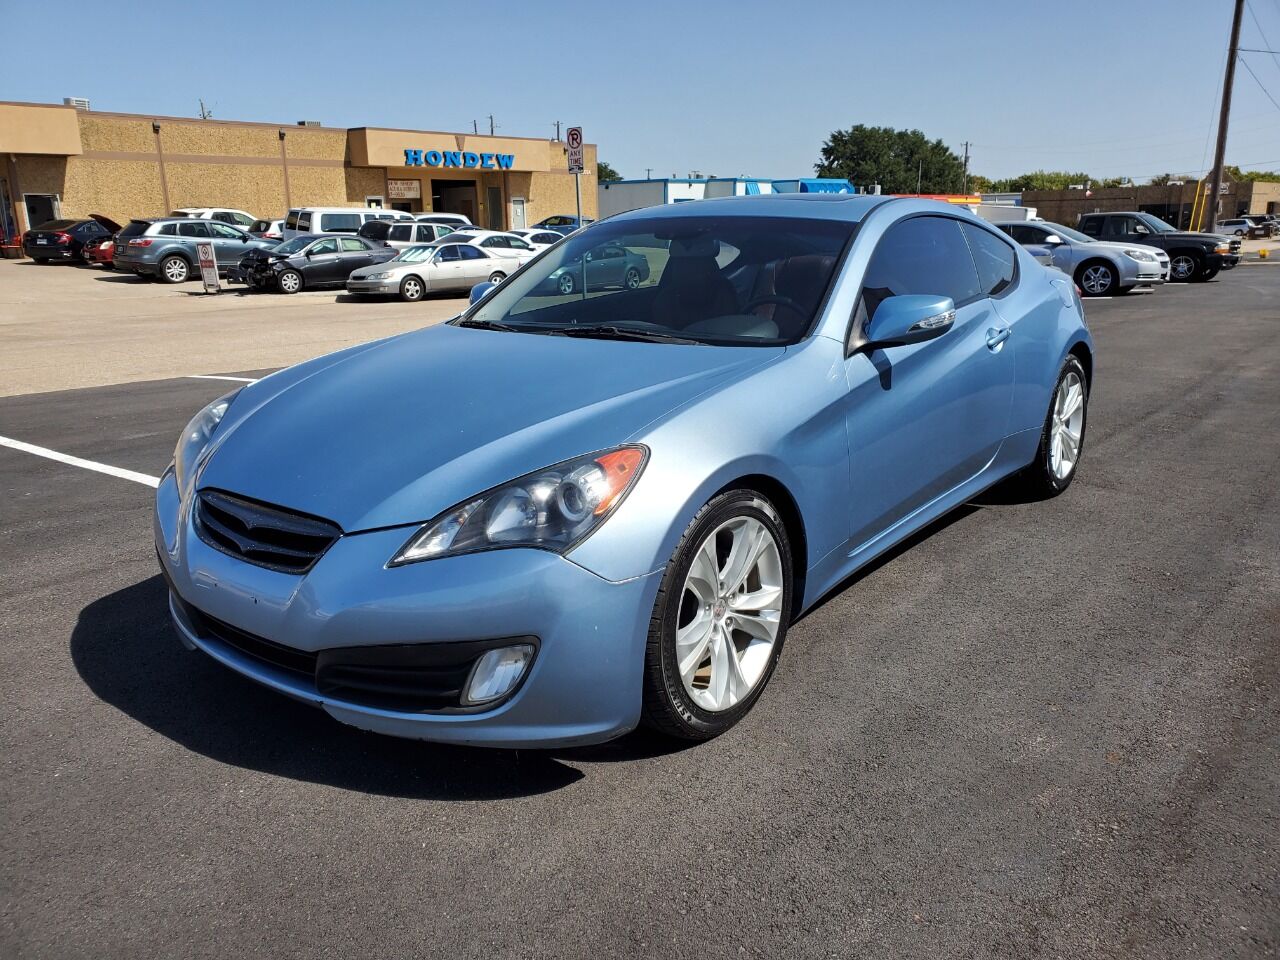 Used Hyundai Genesis Coupe for Sale in Dallas, TX - CarGurus